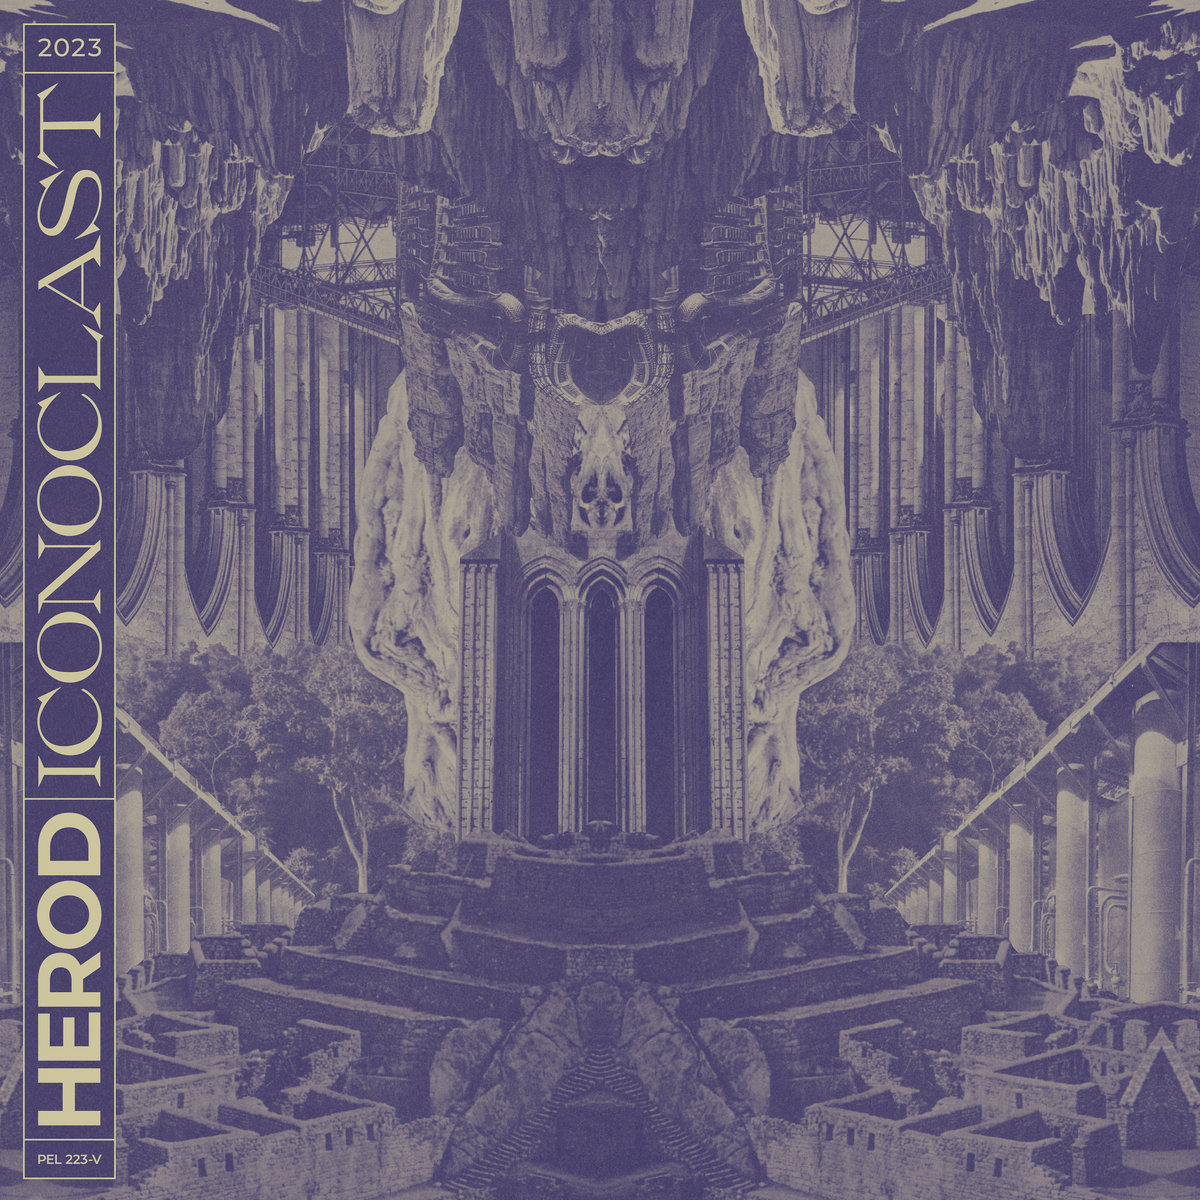 Herod - "Iconoclast" - 2023